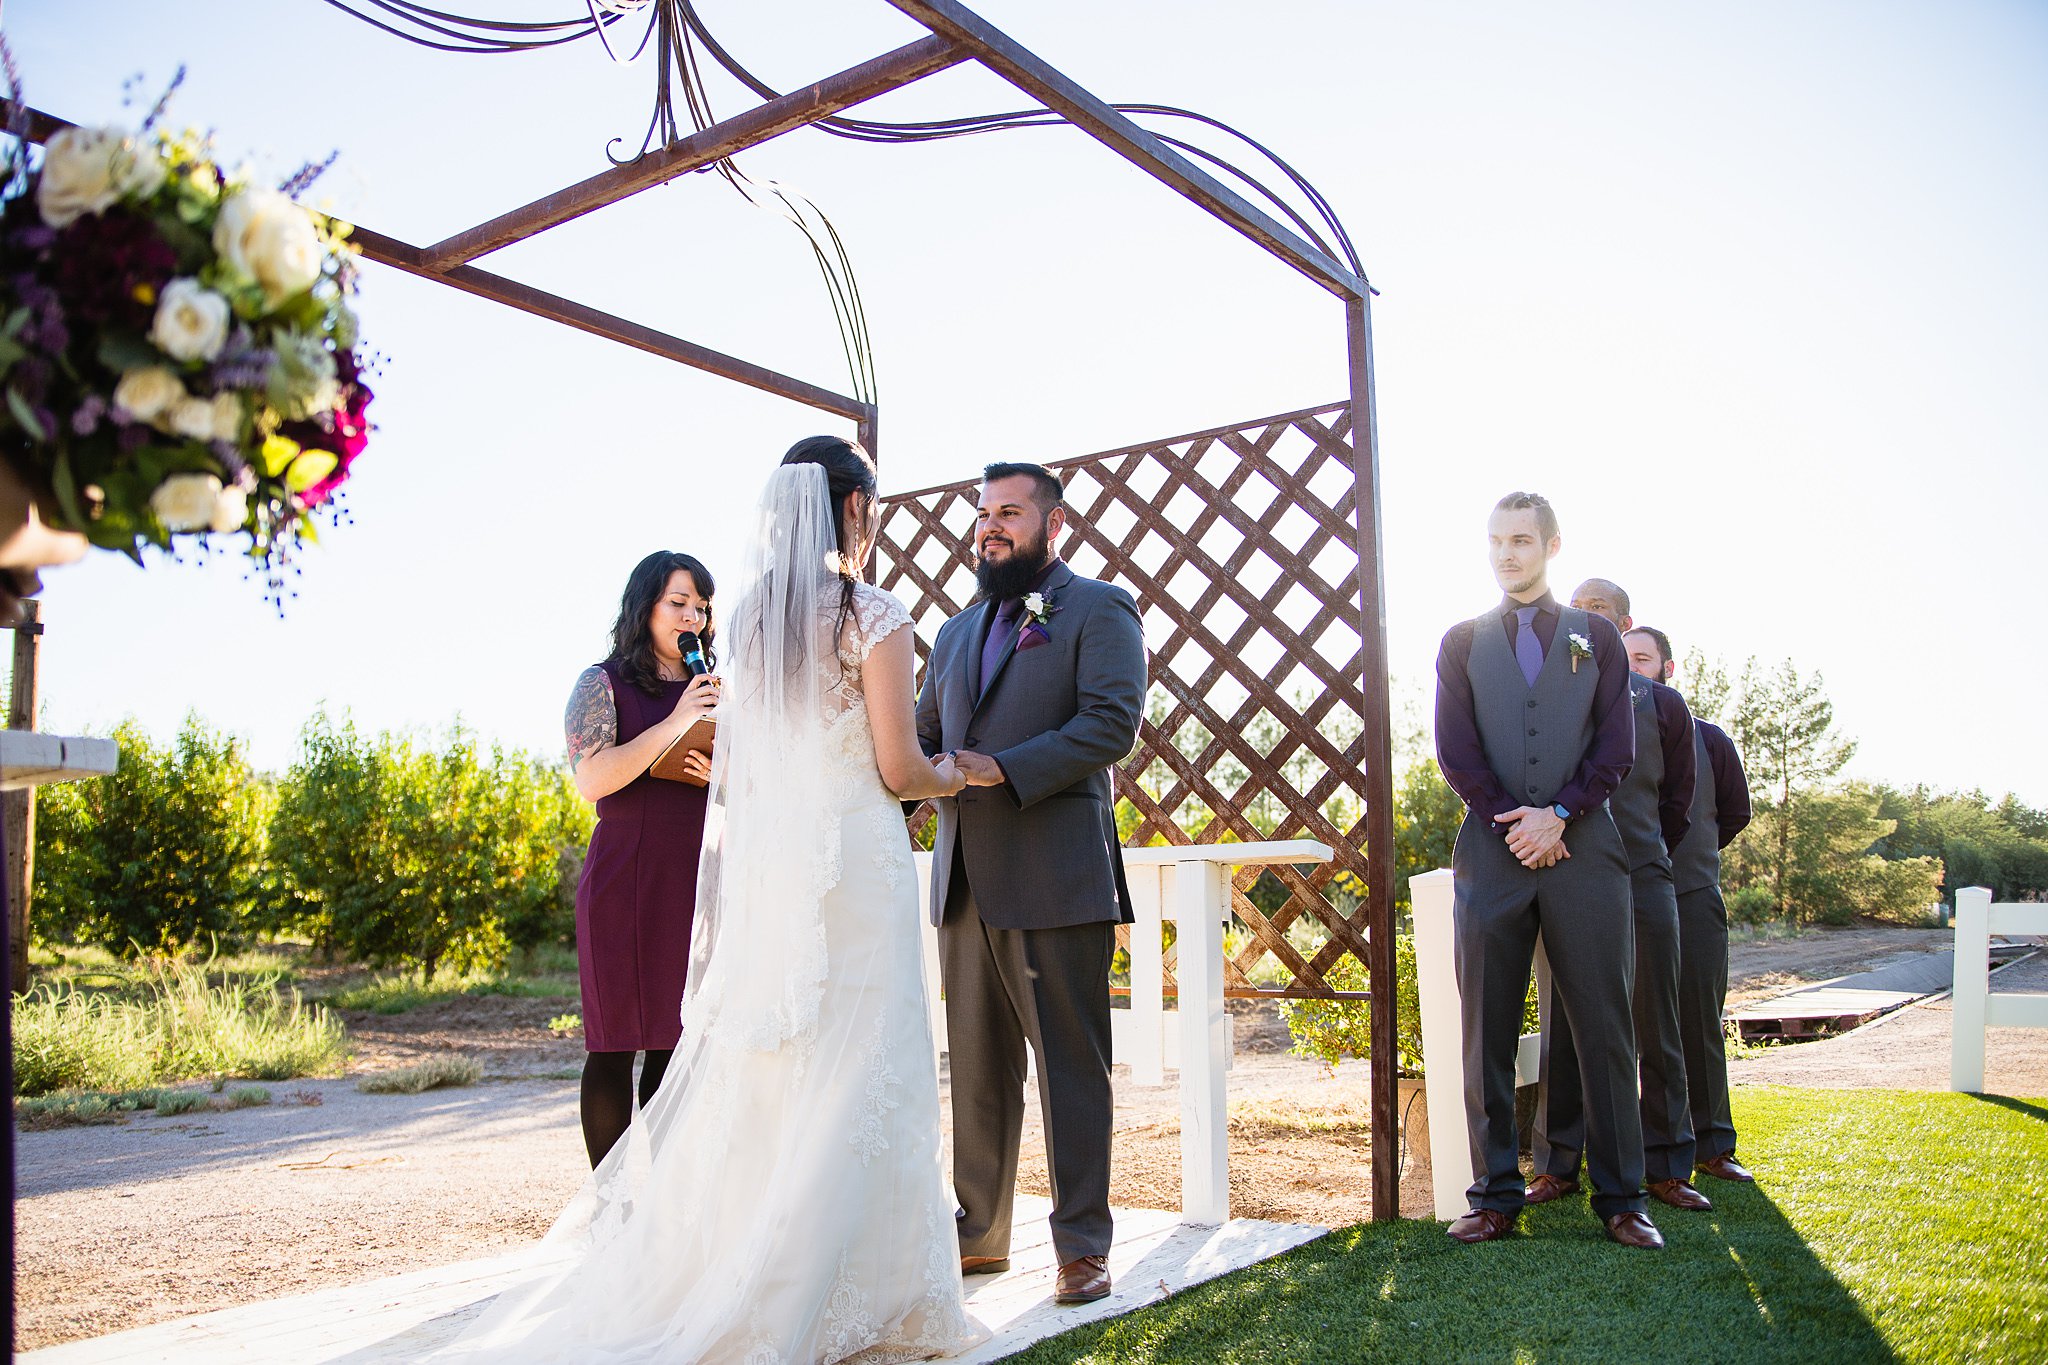 Wedding ceremony at the Schnepf Farm's Farmhouse by Arizona wedding photographer PMA Photography.